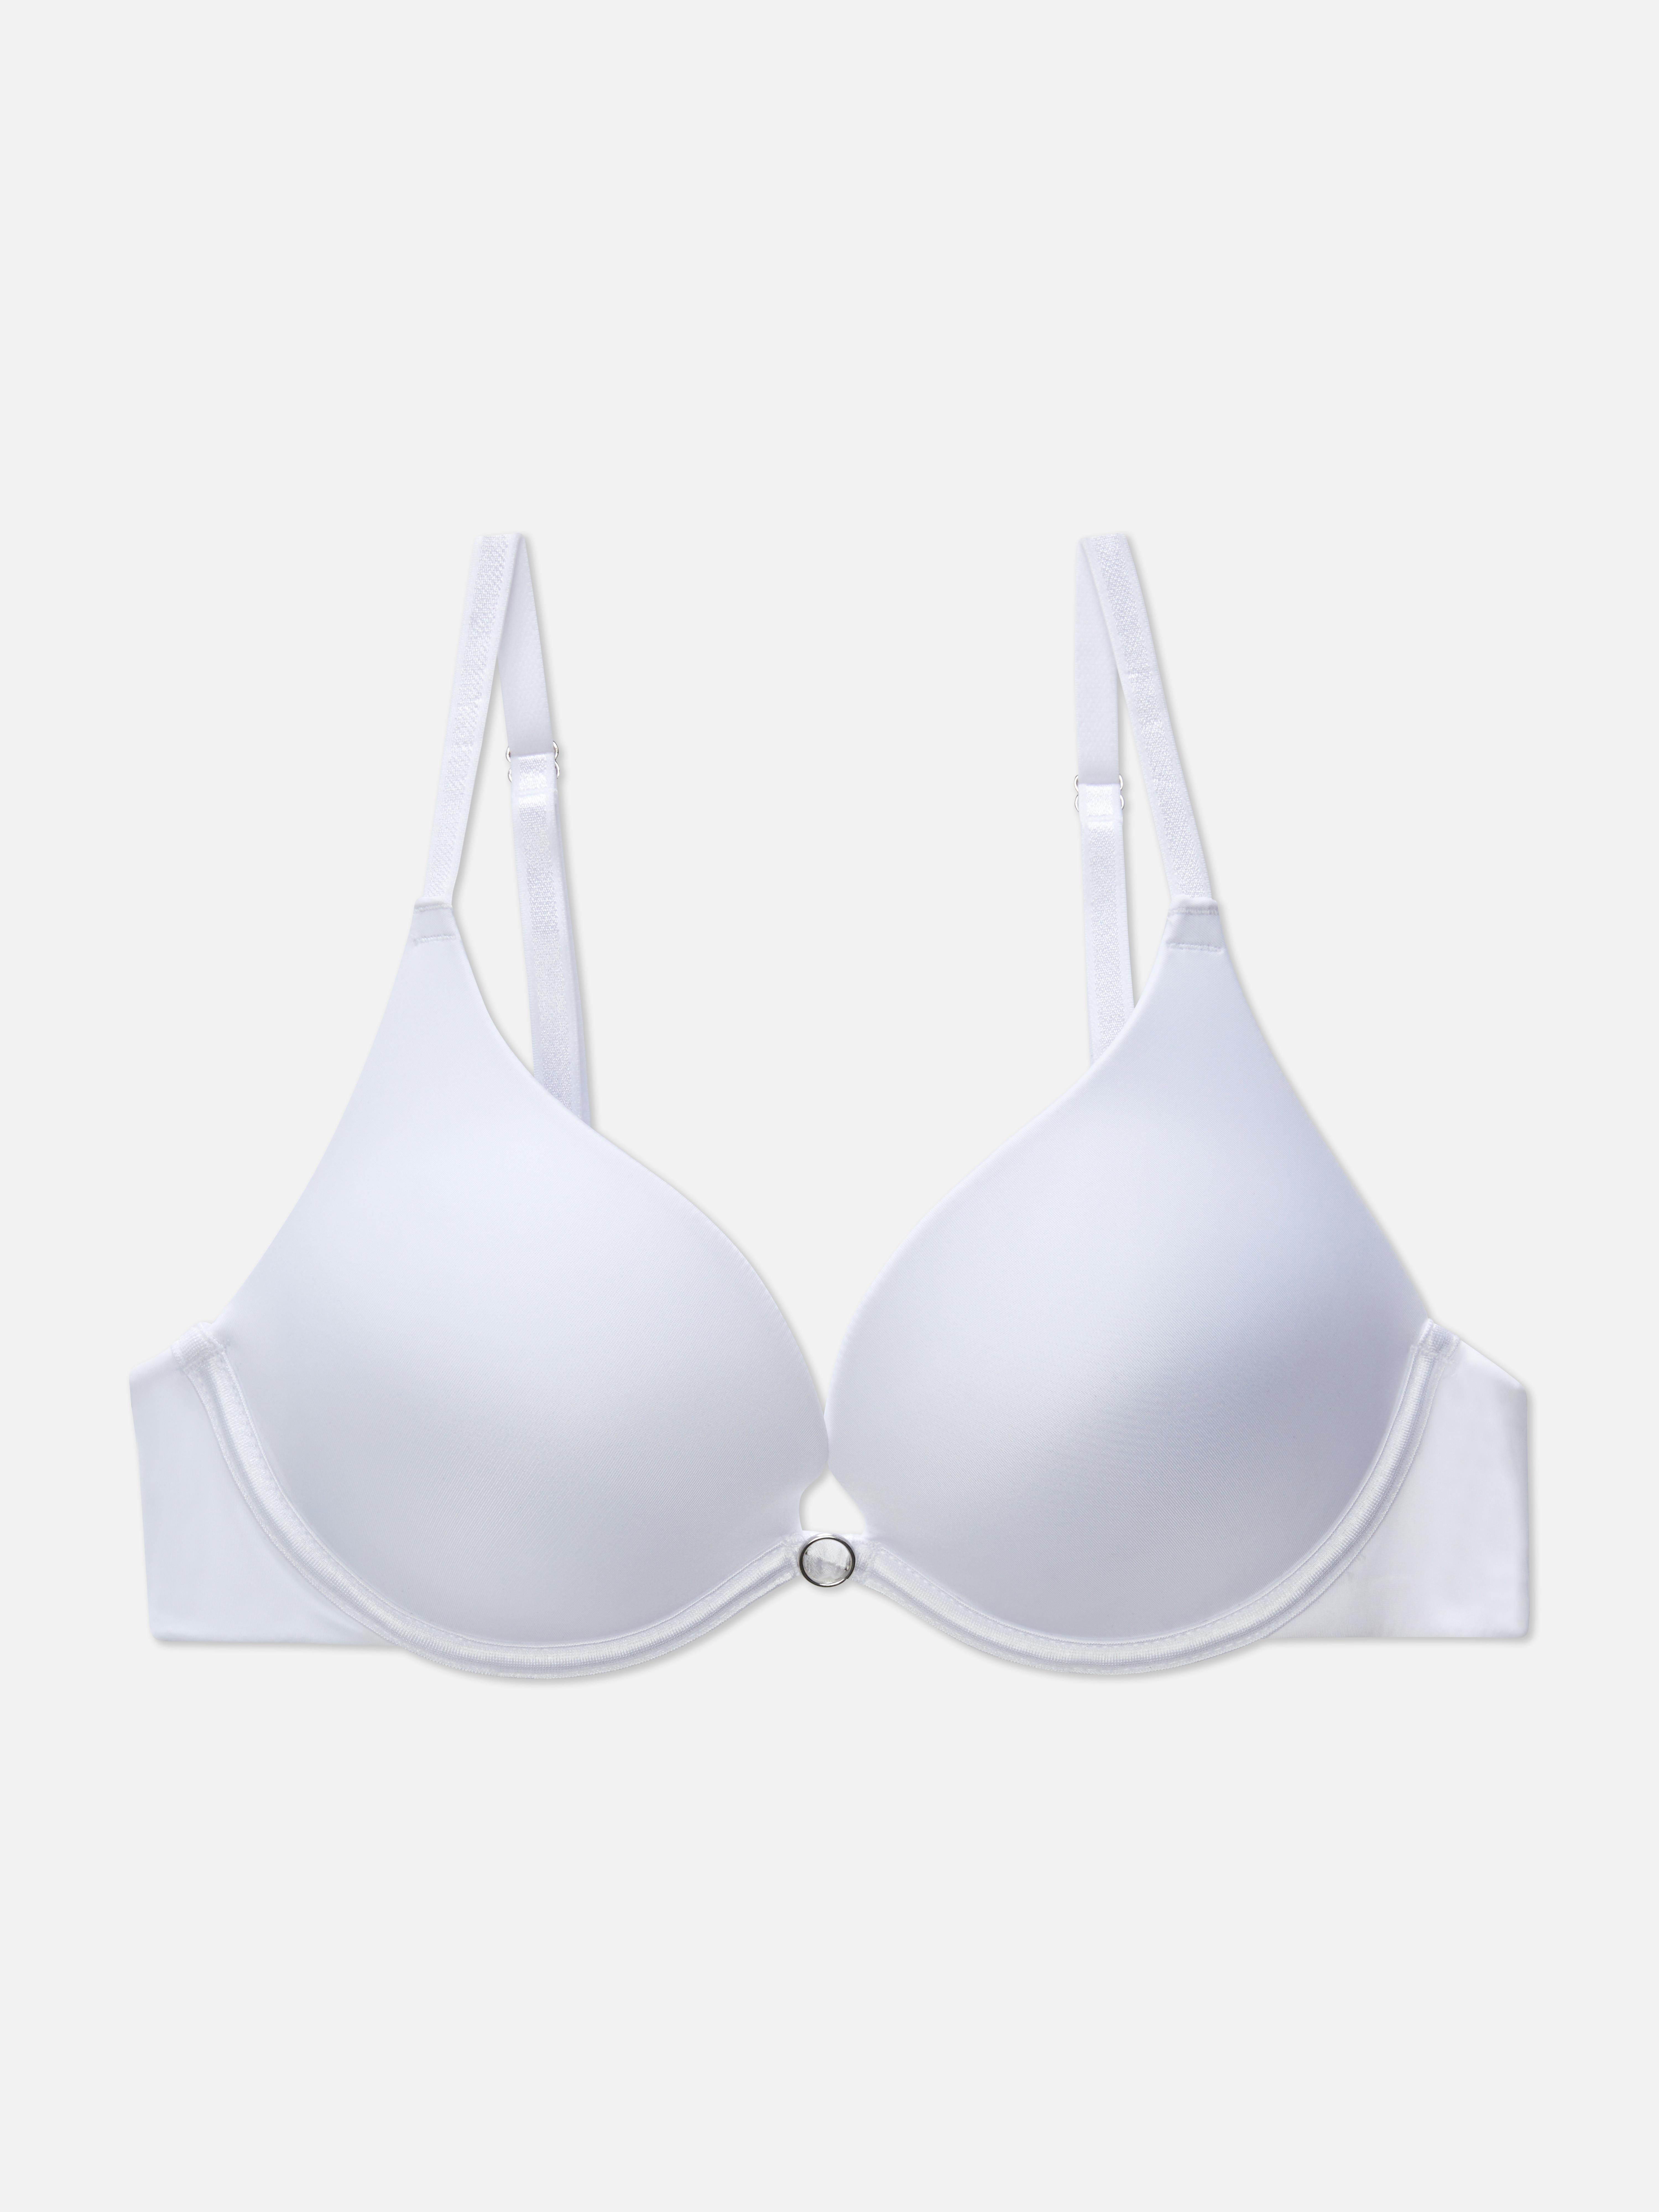 PRIMARK SECRET POSSESSIONS Women's Bralette White Size 14/16 Lace Soft Cup  New $11.46 - PicClick